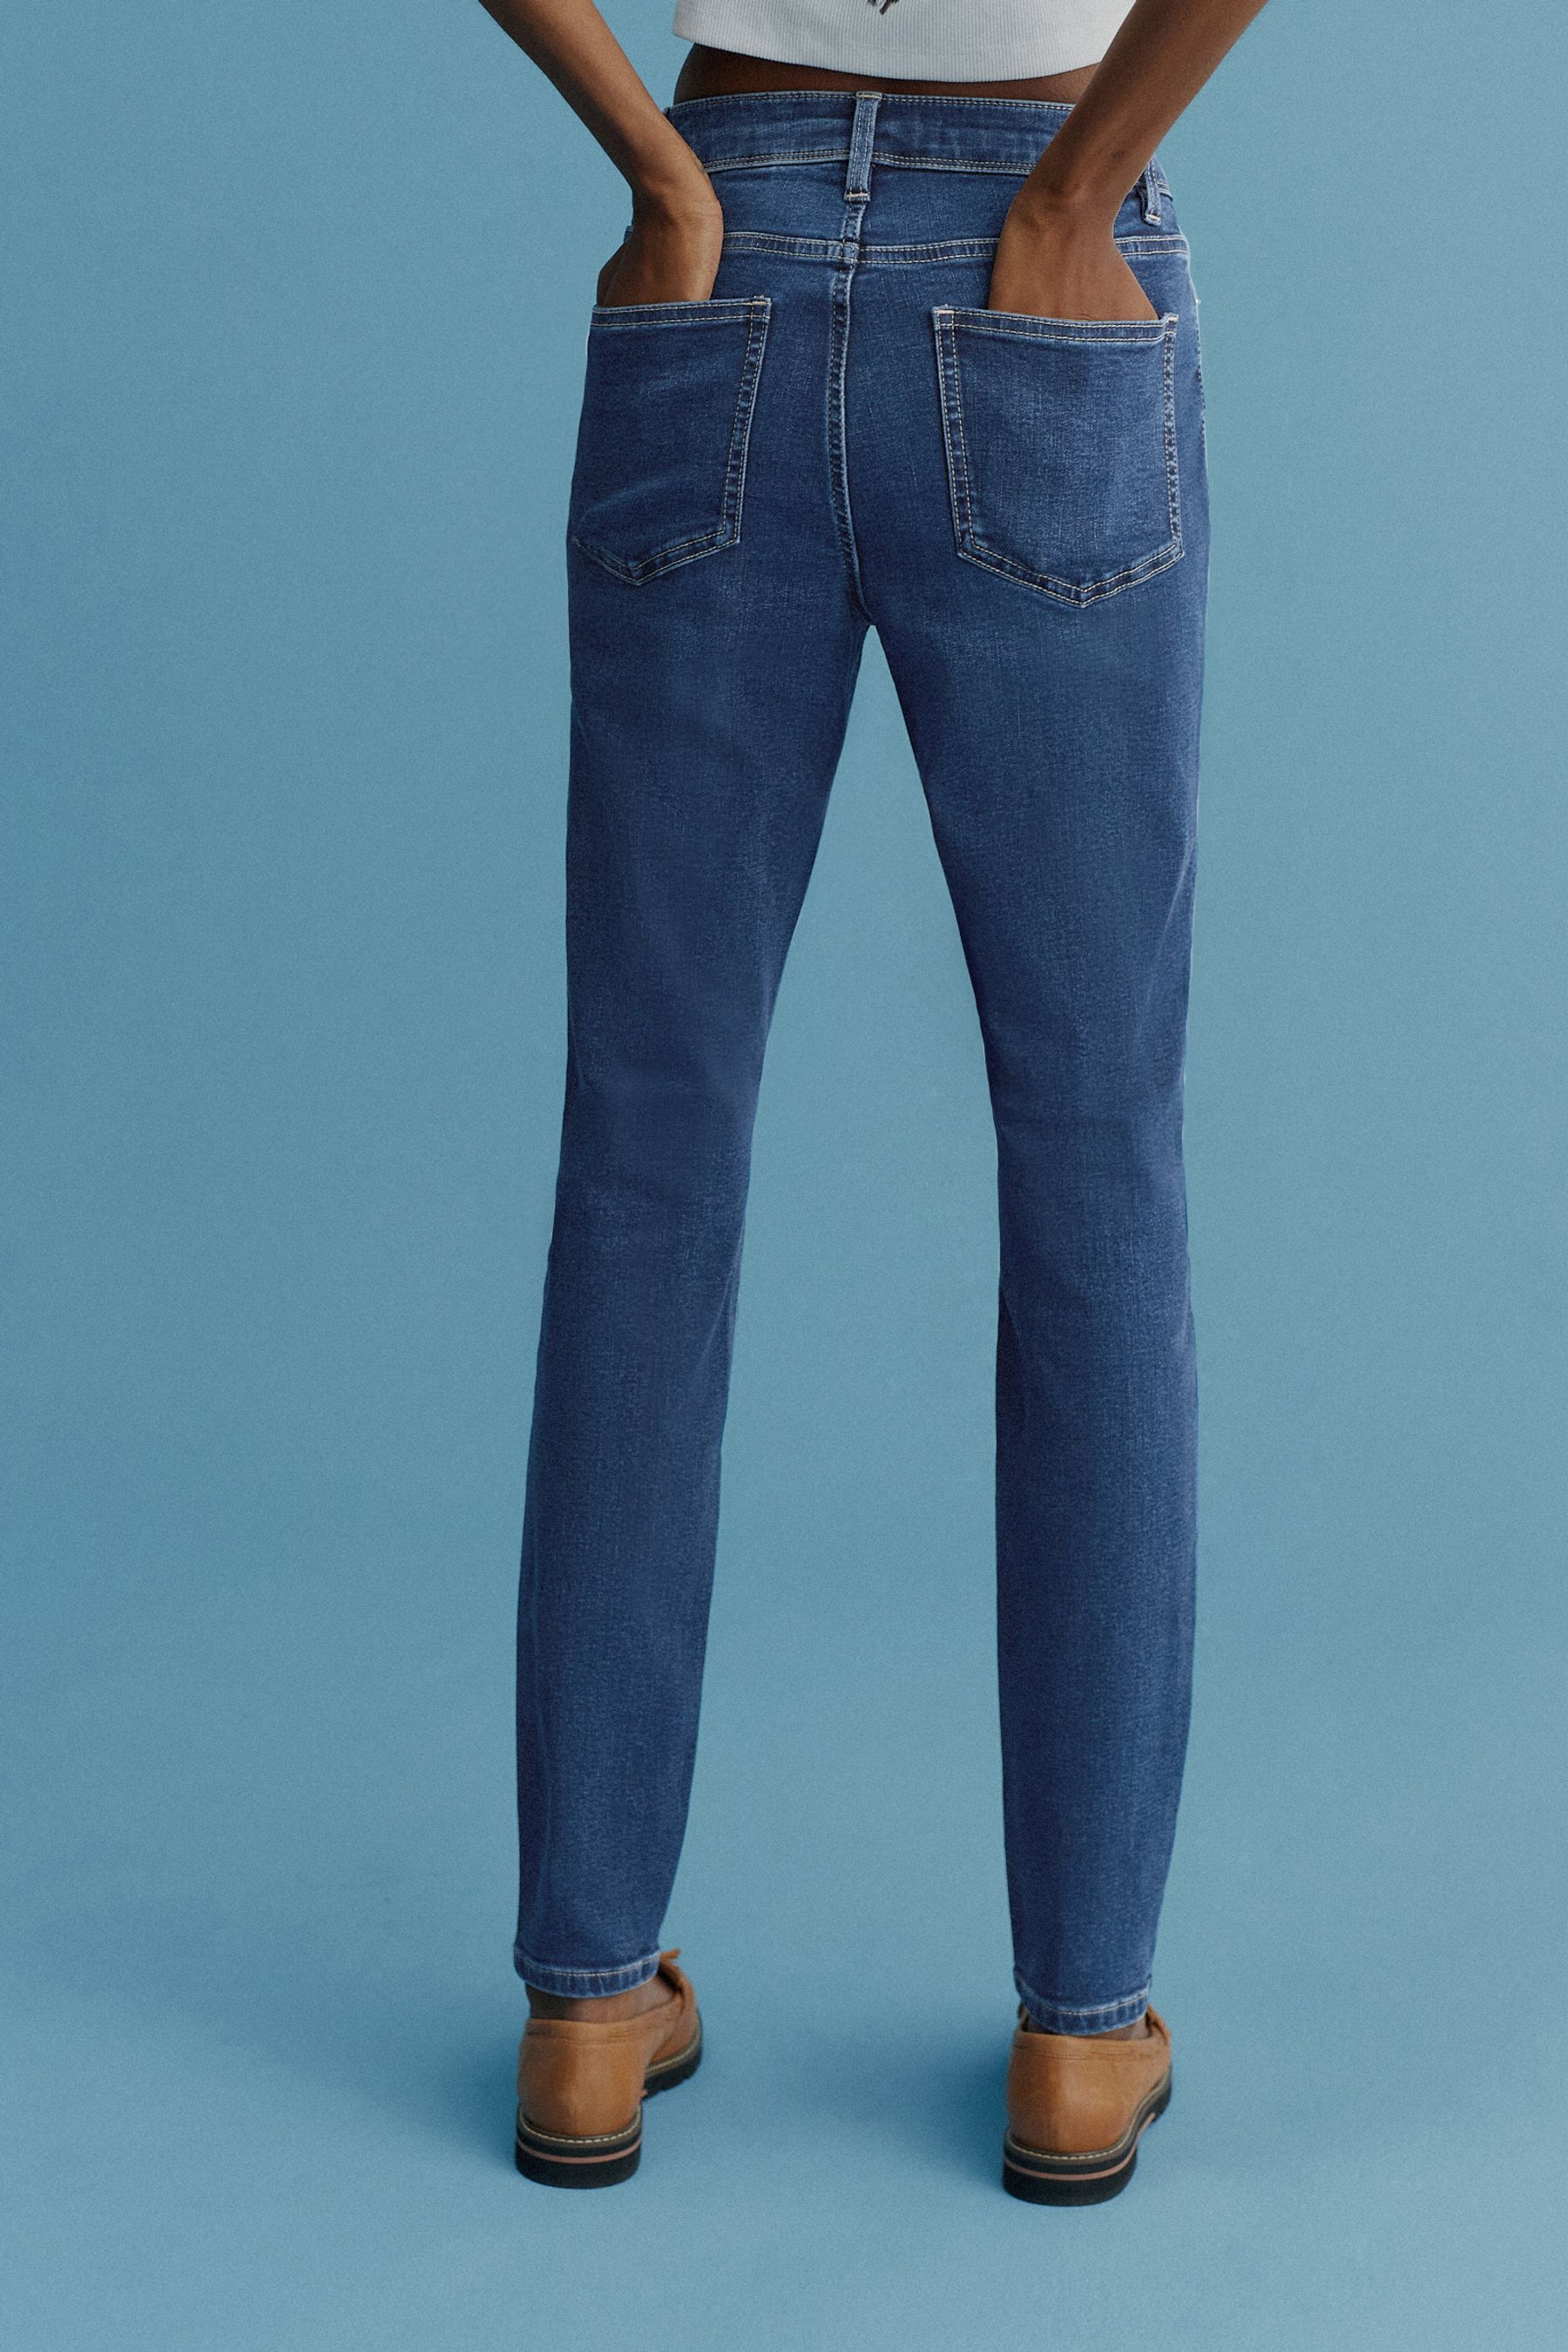 Buy Skinny Jeans from Next Ireland